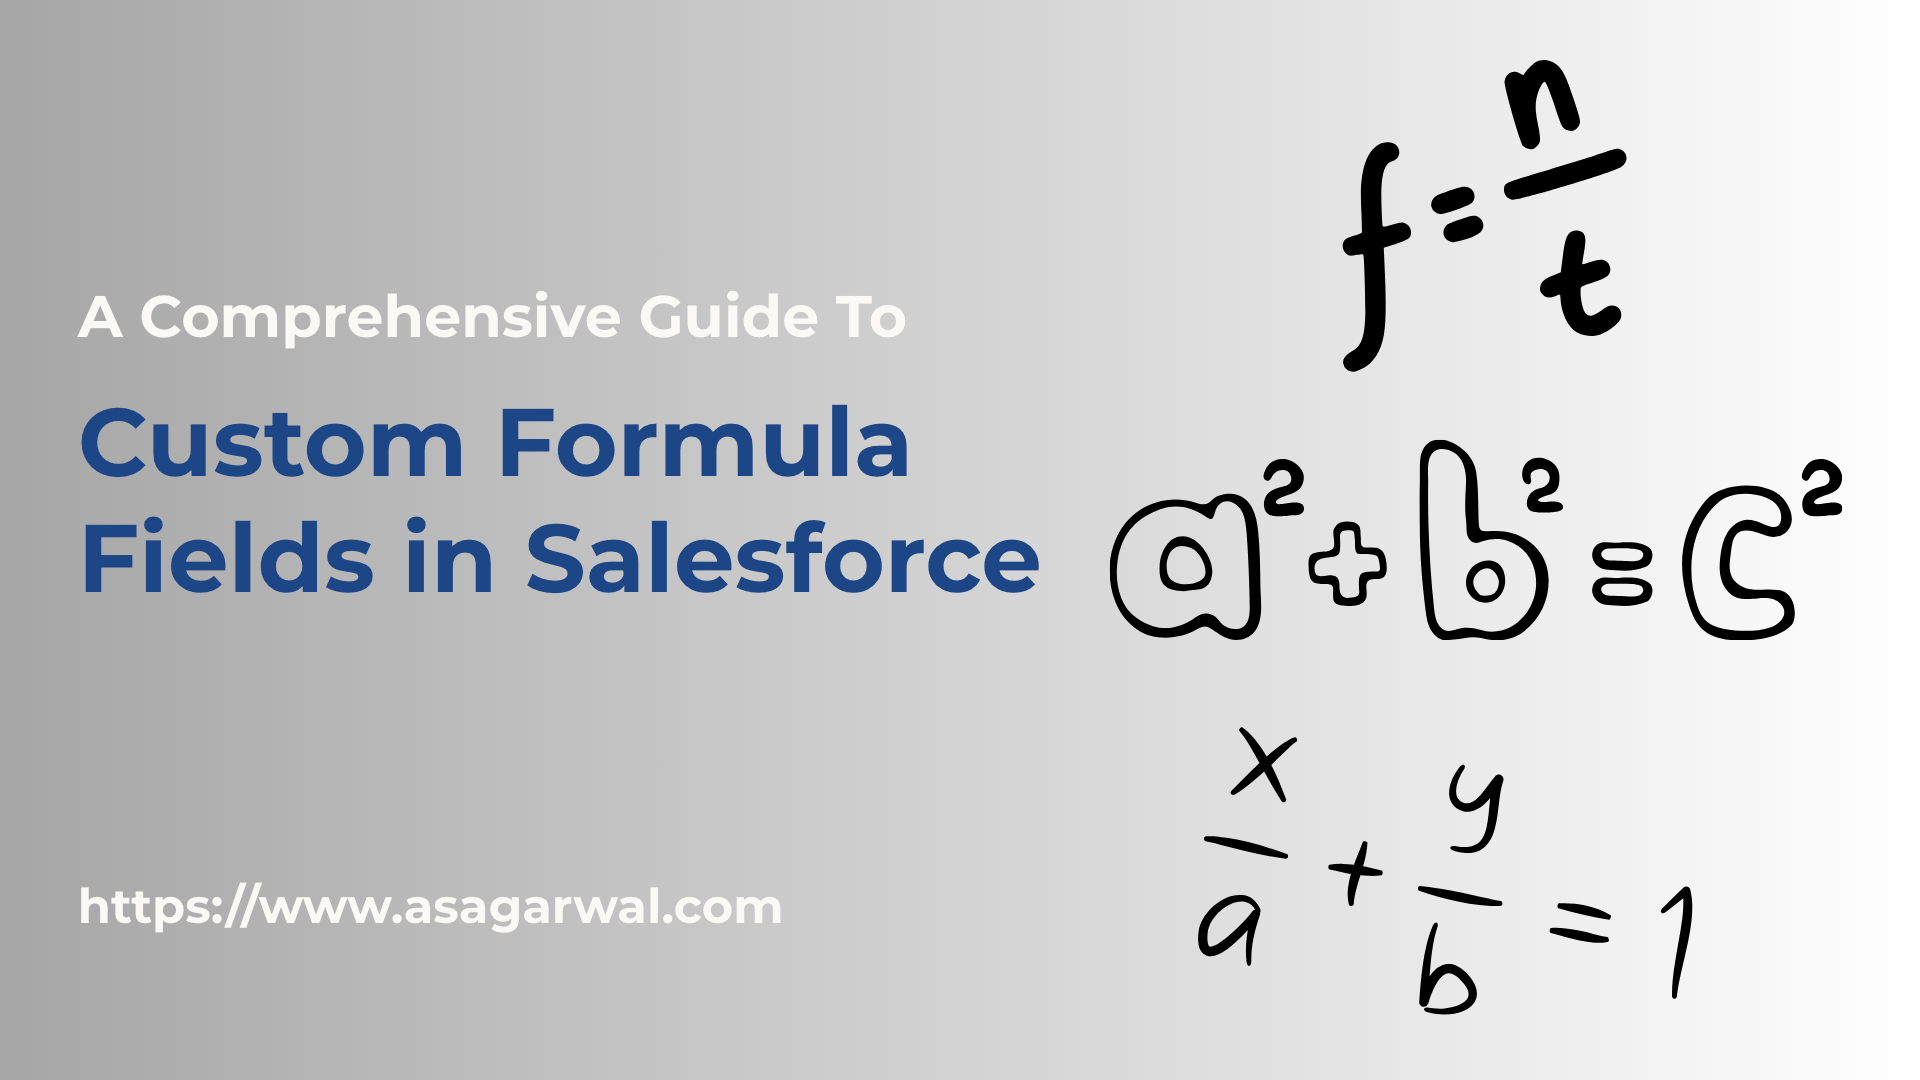 A Comprehensive Guide to Custom Formula Fields in Salesforce